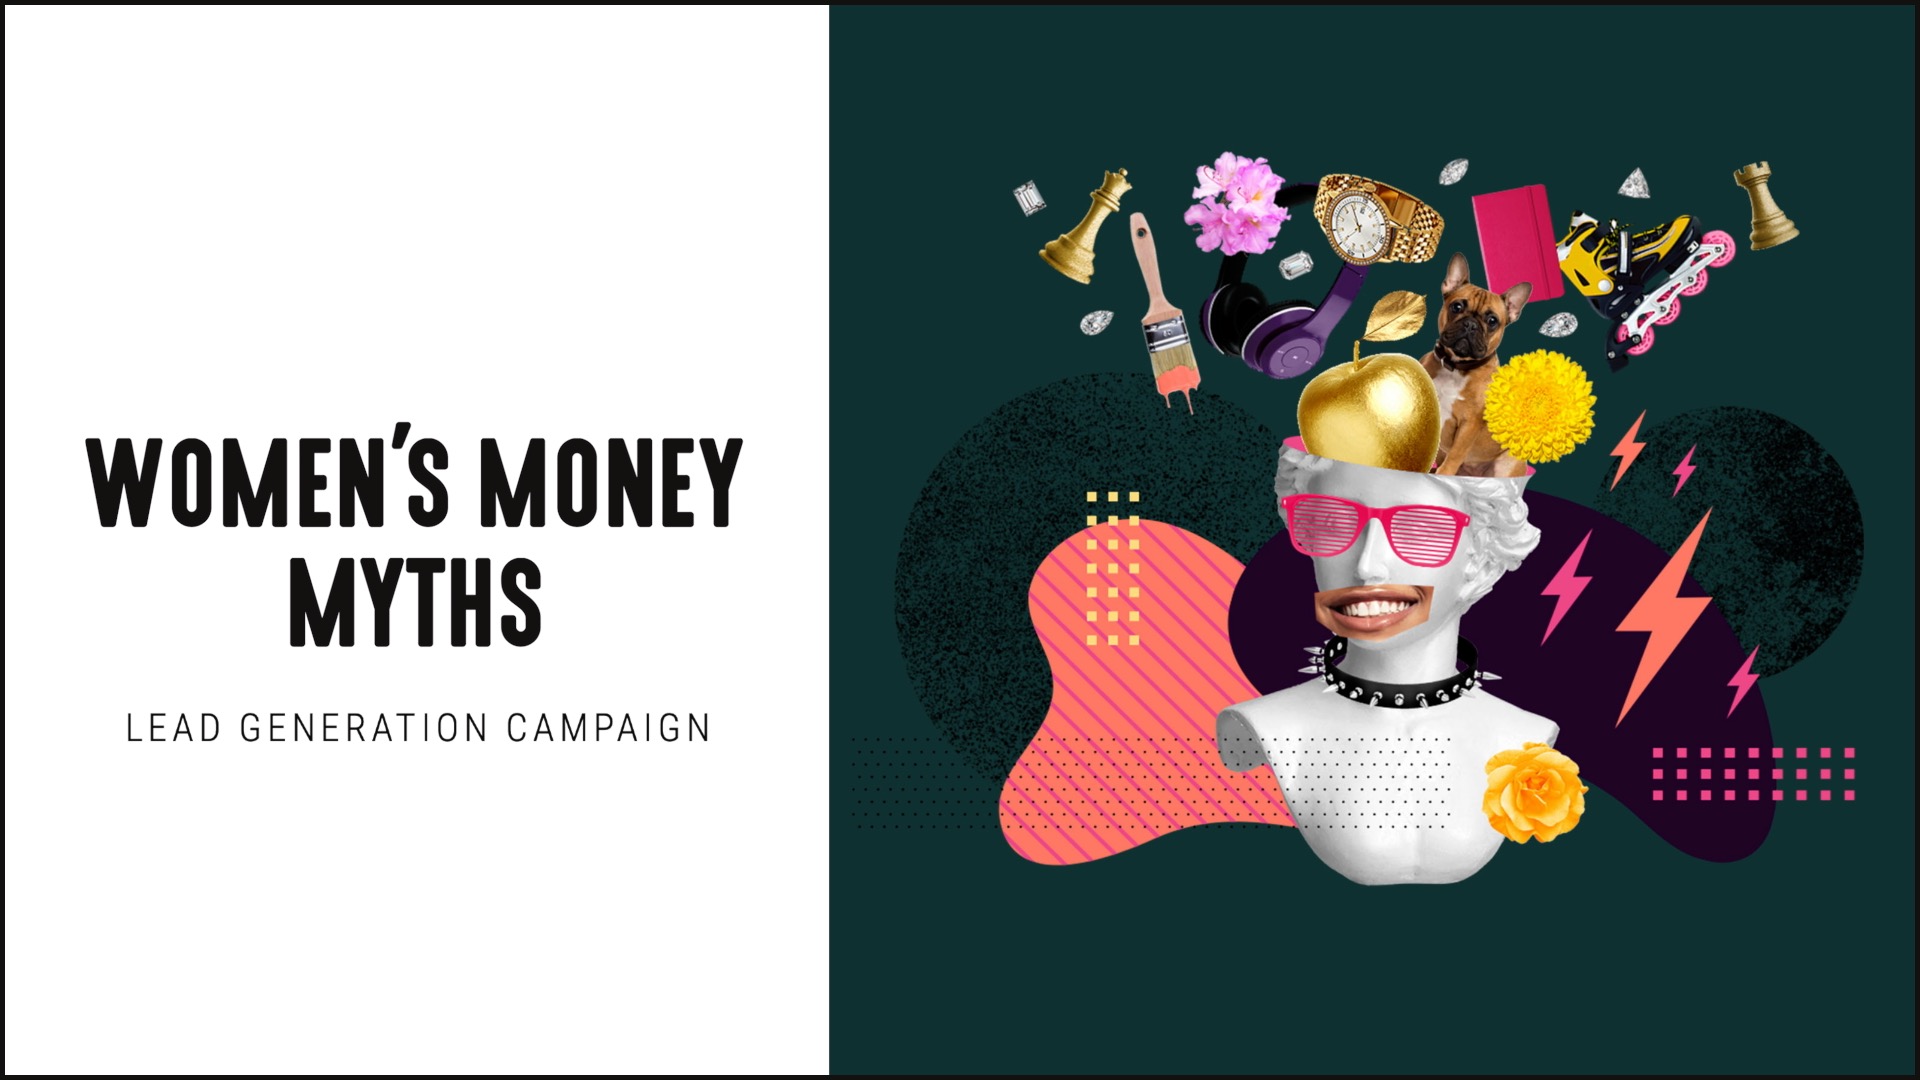 [NEW] Women’s Money Myths Lead – Lead Generation Campaign